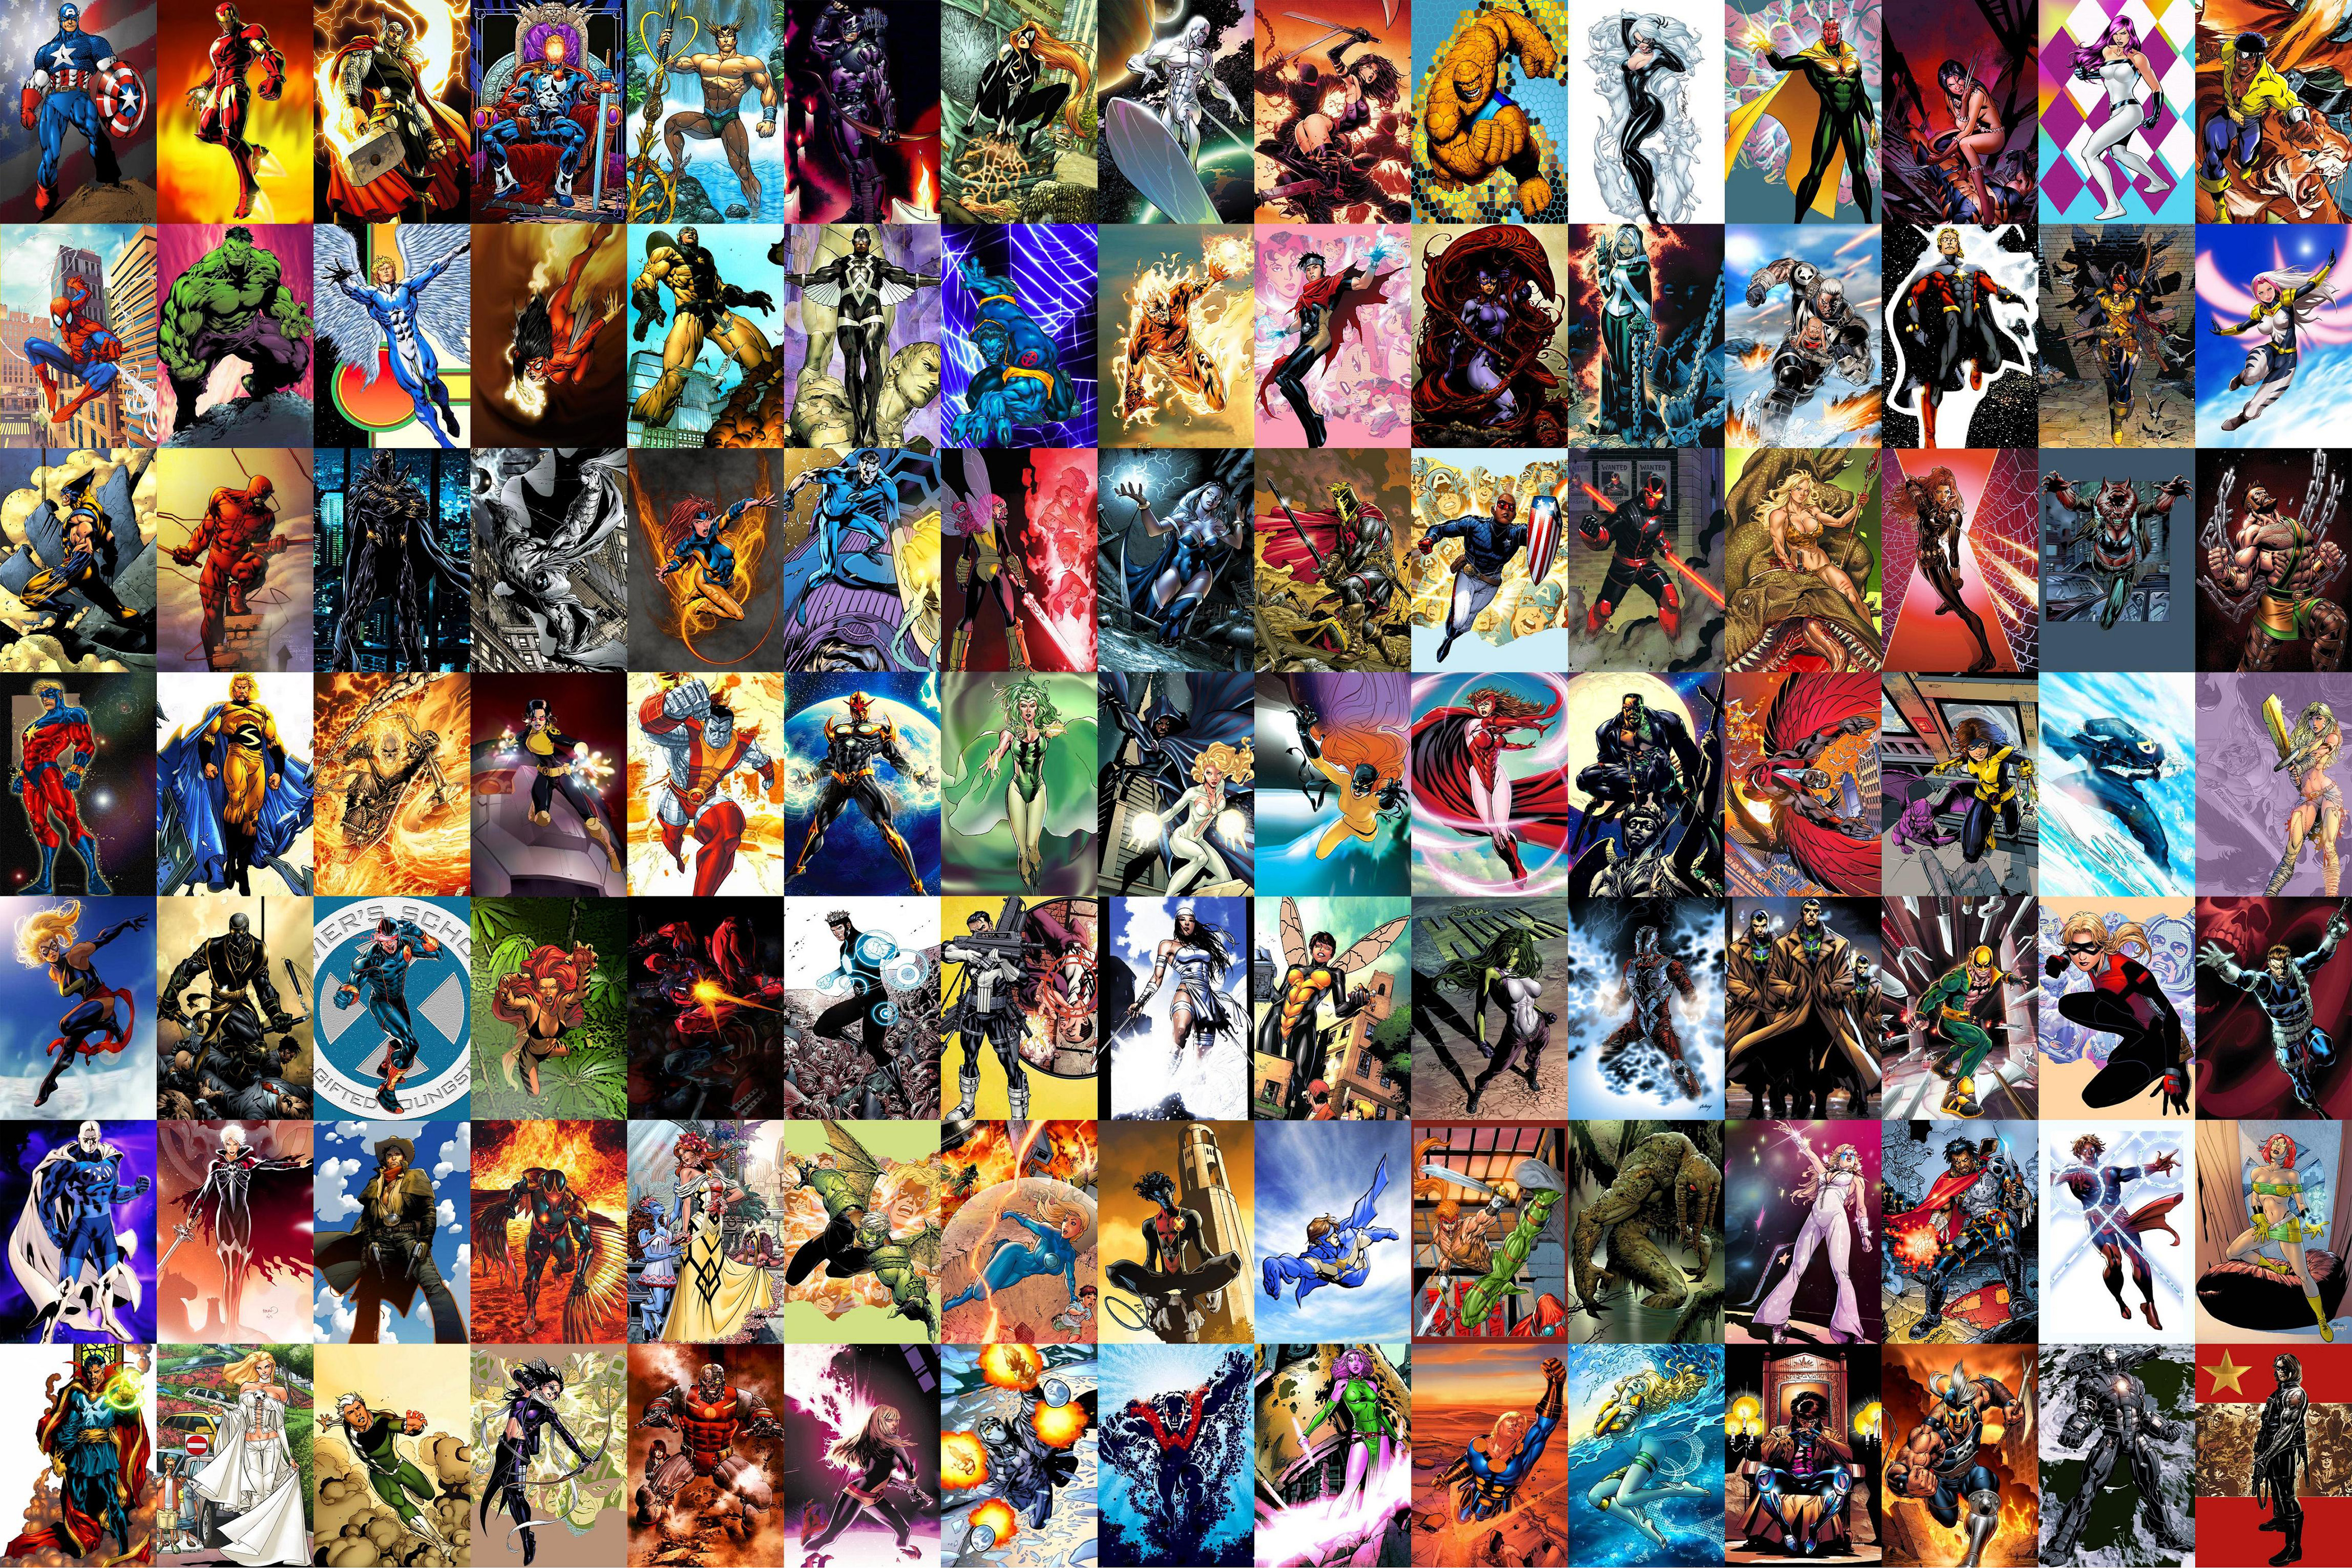 comics, marvel comics, angel (marvel comics), beast (marvel comics), ben grimm, bishop (marvel comics), black bolt, black cat (marvel comics), black panther (marvel comics), black widow, captain america, captain marvel, cassandra lang, cloak (marvel comics), colossus, cyclops (marvel comics), dagger (marvel comics), daredevil, dazzler (marvel comics), deadpool, deathlok, doctor strange, emma frost, falcon (marvel comics), gambit (marvel comics), ghost rider, havok (marvel comics), hawkeye, hellcat (marvel comics), hercules (marvel comics), hulk, human torch (marvel comics), invisible woman, iron fist (marvel comics), iron man, jean grey, jessica jones, johnny storm, jubilee (marvel comics), kitty pryde, lockheed (marvel comics), luke cage, magik (marvel comics), man thing, medusa (marvel comics), mister fantastic, moon knight, ms marvel, namor the sub mariner, nick fury, nightcrawler (marvel comics), nova (marvel comics), phoenix (marvel comics), pixie (marvel comics), power man, psylocke (marvel comics), punisher, quicksilver (marvel comics), rachel summers, reed richards, rogue (marvel comics), scarlet witch, sentinel (marvel comics), sentry (marvel comics), shanna the she devil, she hulk, silver surfer, spider man, spider woman, storm (marvel comics), sub mariner, susan storm, t'challa, the cat (marvel comics), thing (marvel comics), thor, tigra (marvel comics), vision (marvel comics), war machine, wasp (marvel comics), white witch (marvel comics), wiccan (marvel comics), winter soldier, wolverine, wonder man, x 23, yellowjacket (marvel comics) 5K